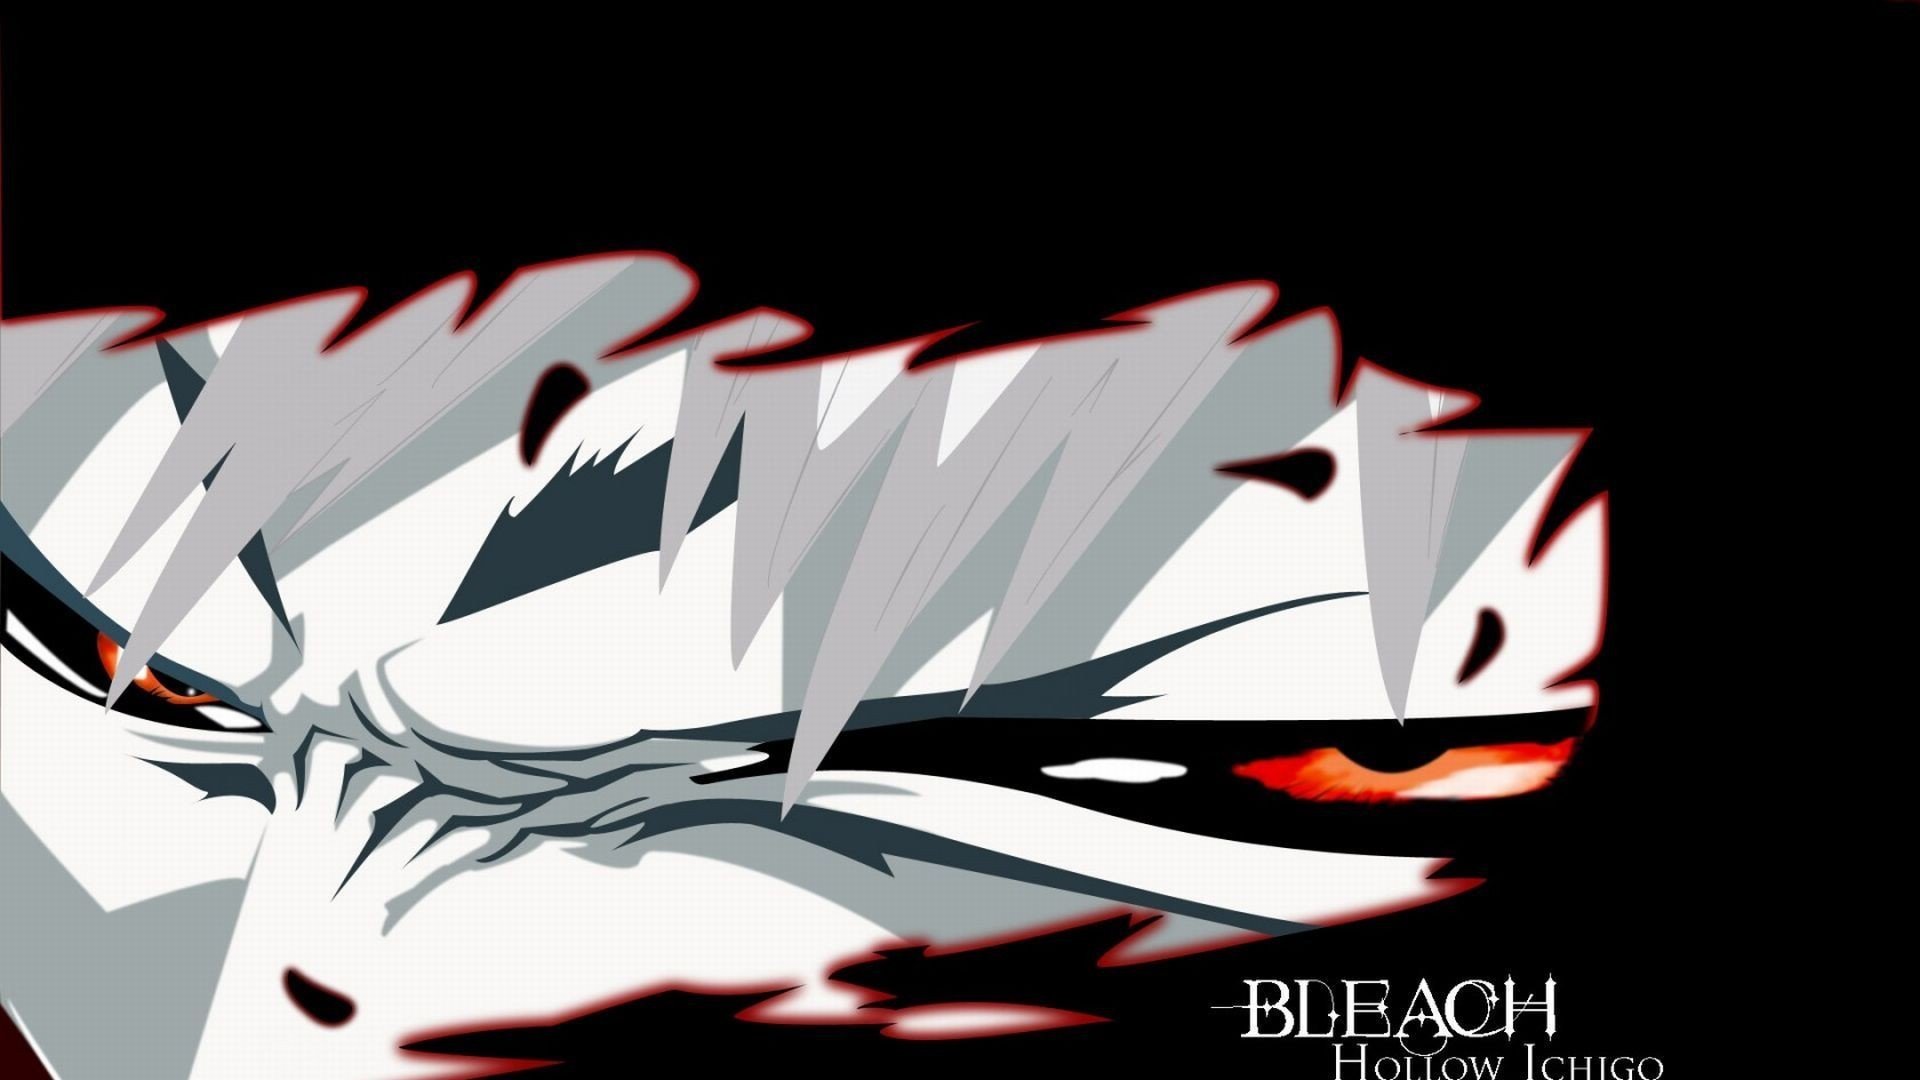 Hollow Ichigo  Kurosaki Ichigo  Mobile Wallpaper by Nominee84 2042399   Zerochan Anime Image Board